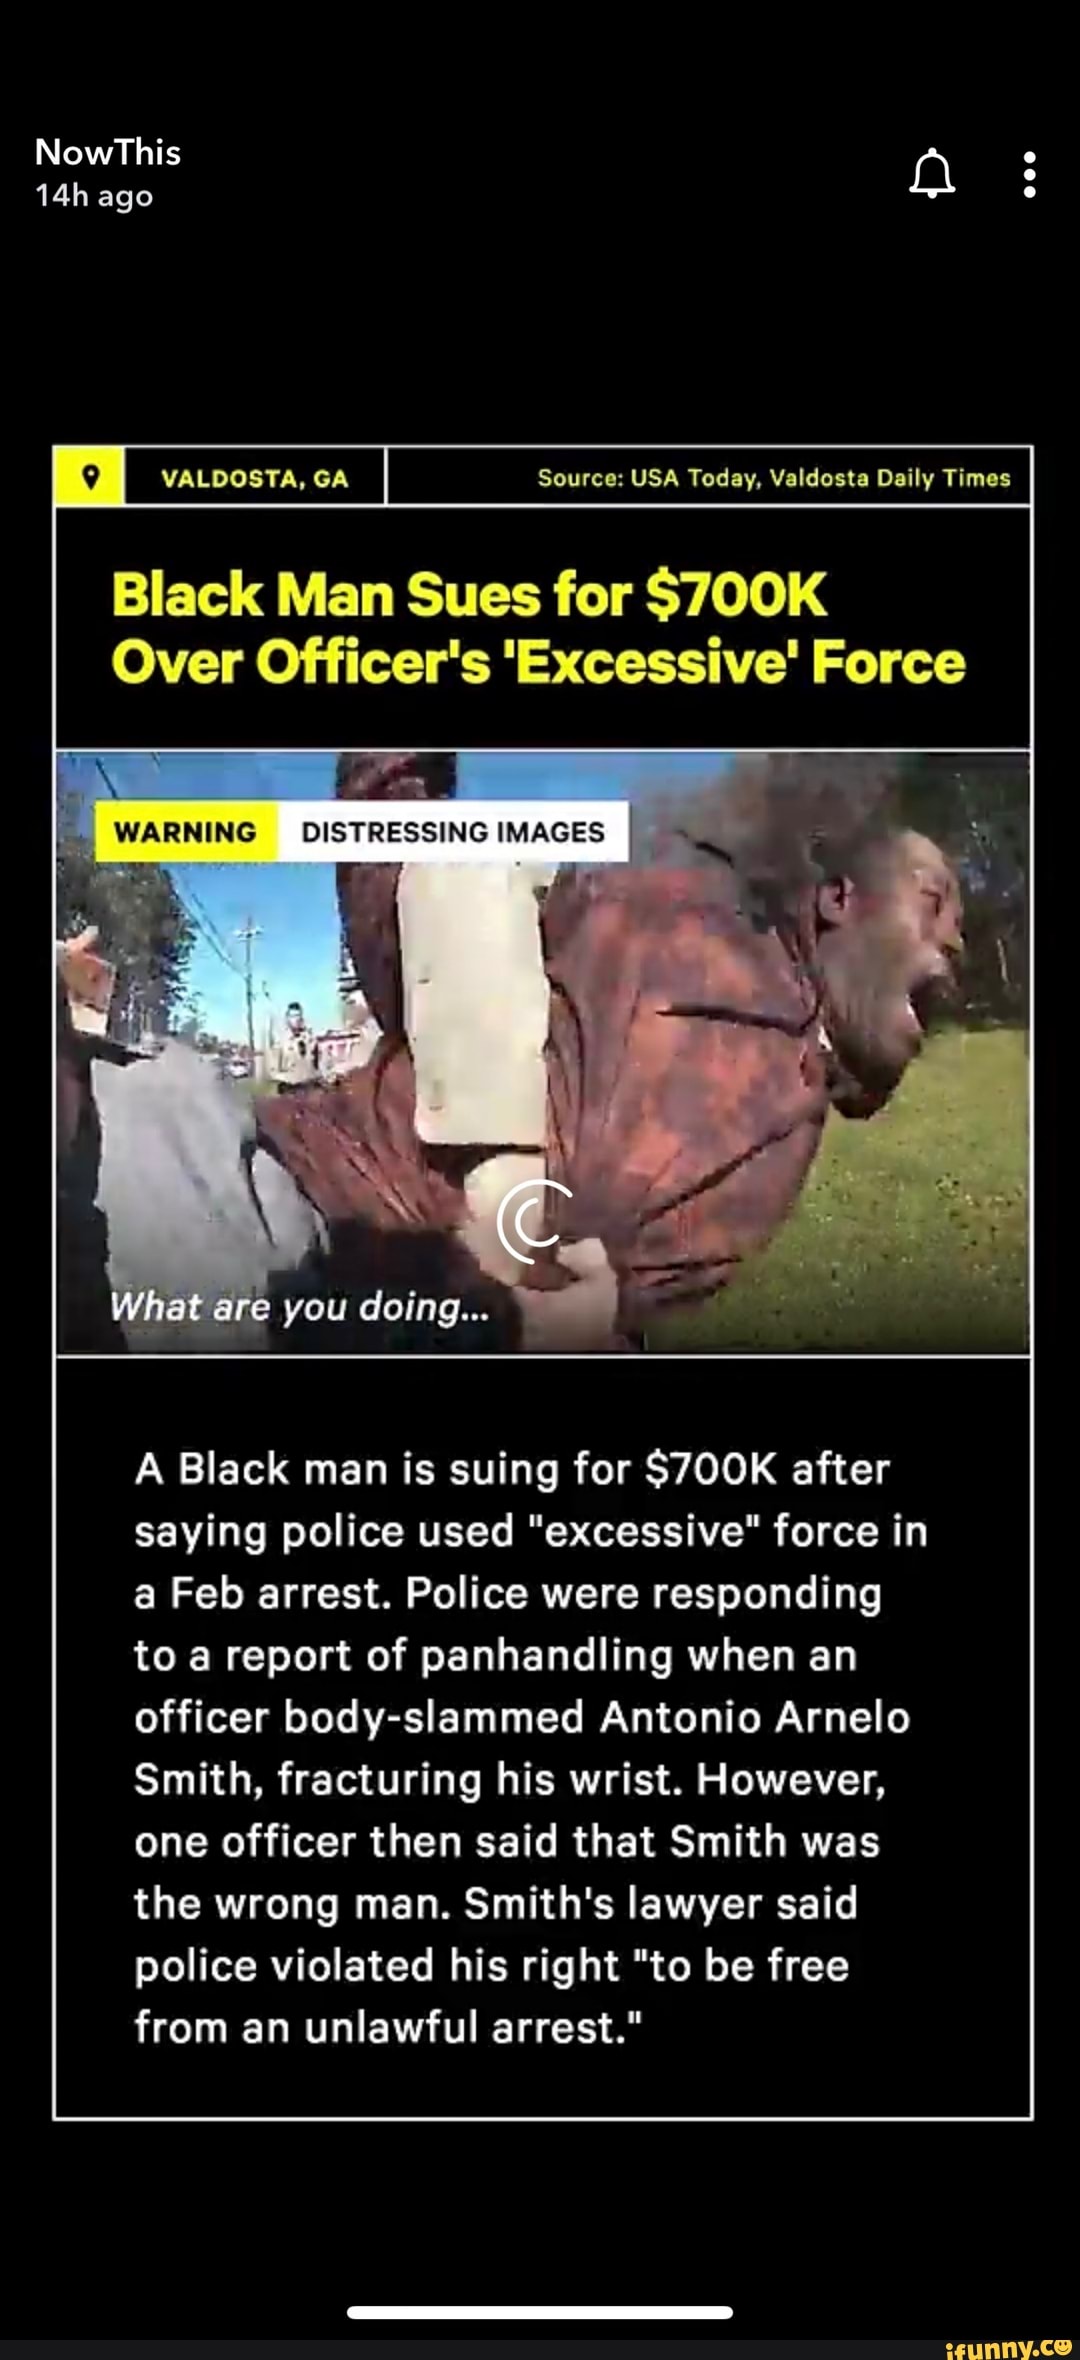 9 Valdosta Ga Source Usa Today Valdosta Daily Times Black Man Sues For 700k Over Officers 2920